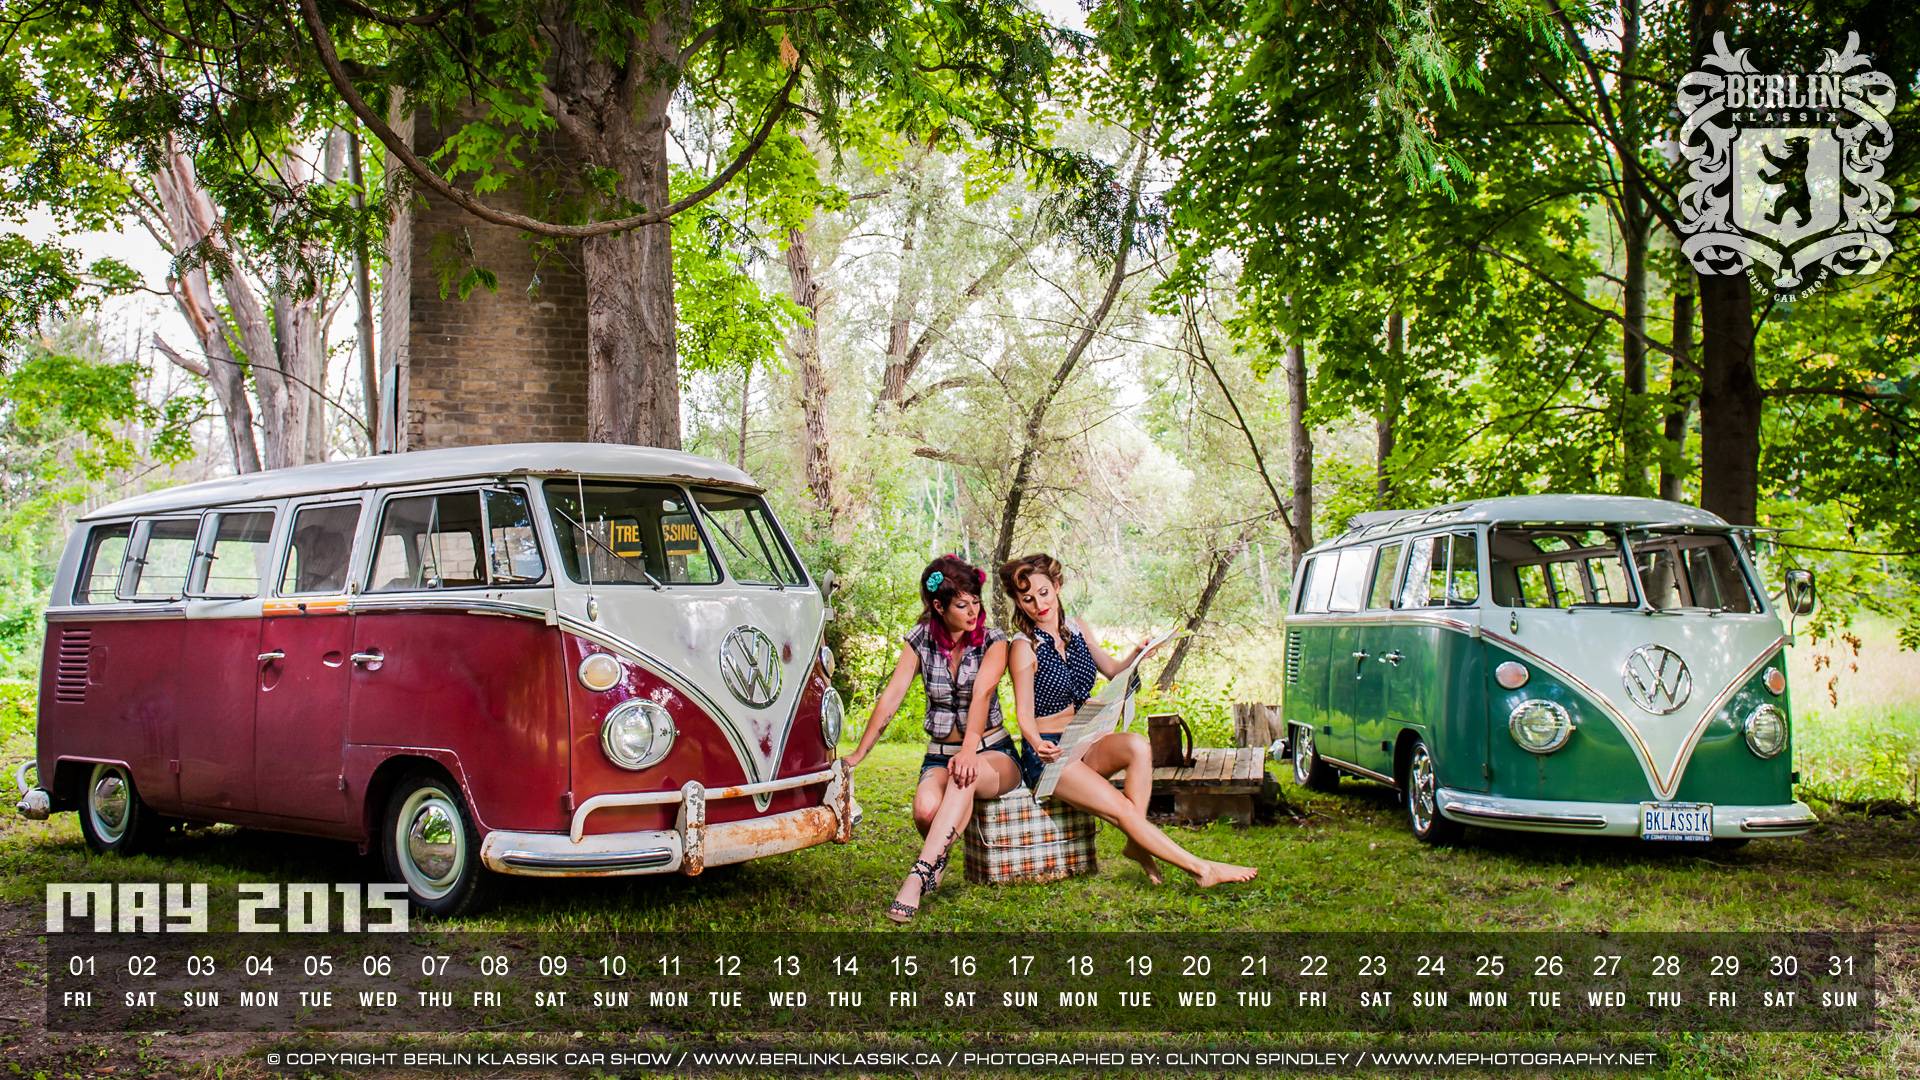 Desktop Wallpaper Calendar May